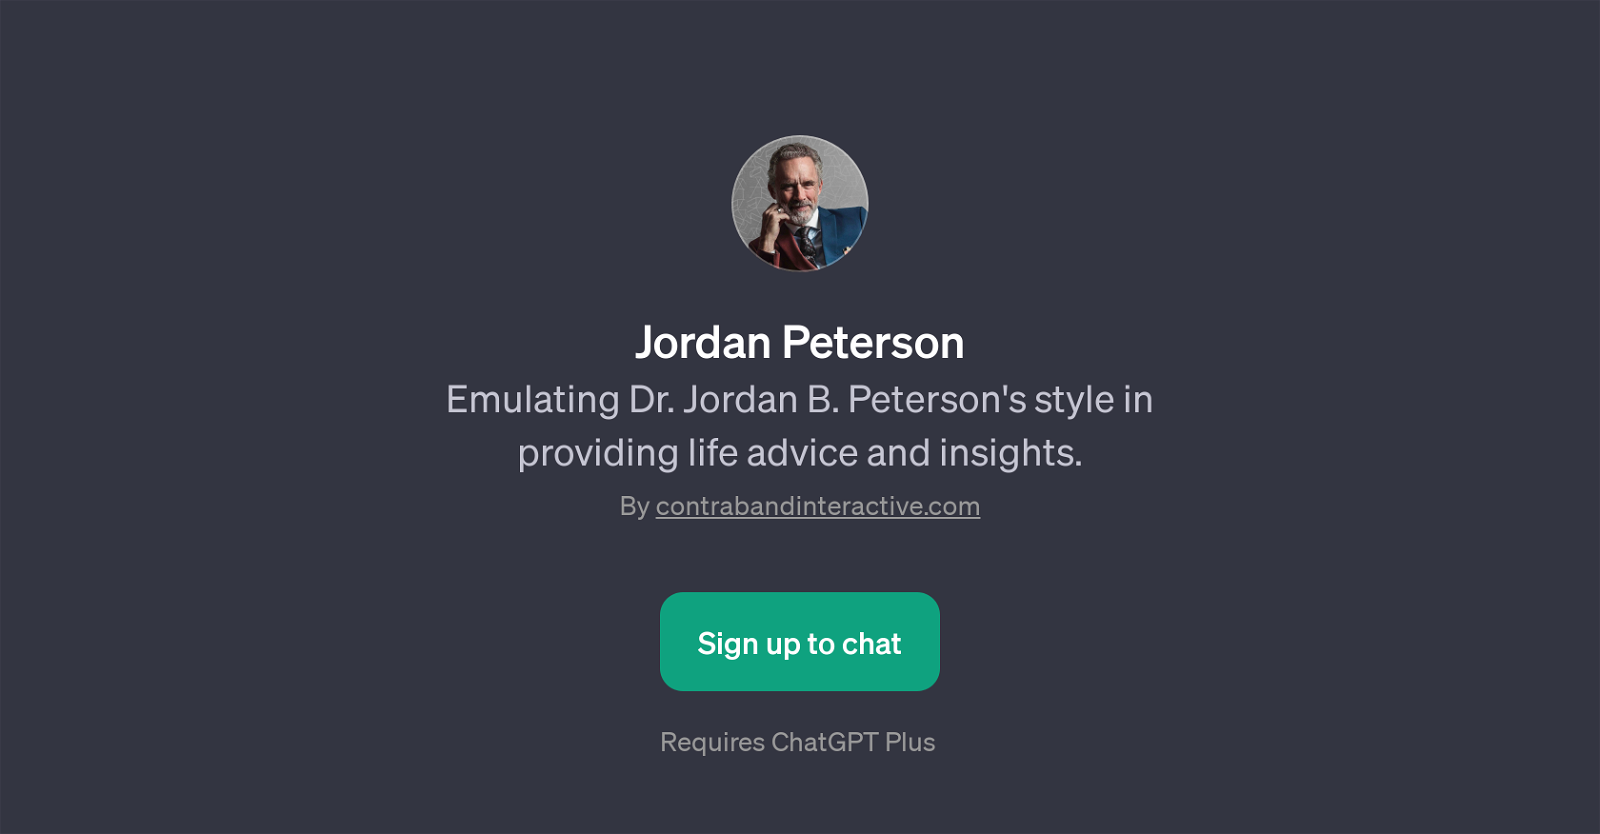 Jordan Peterson website